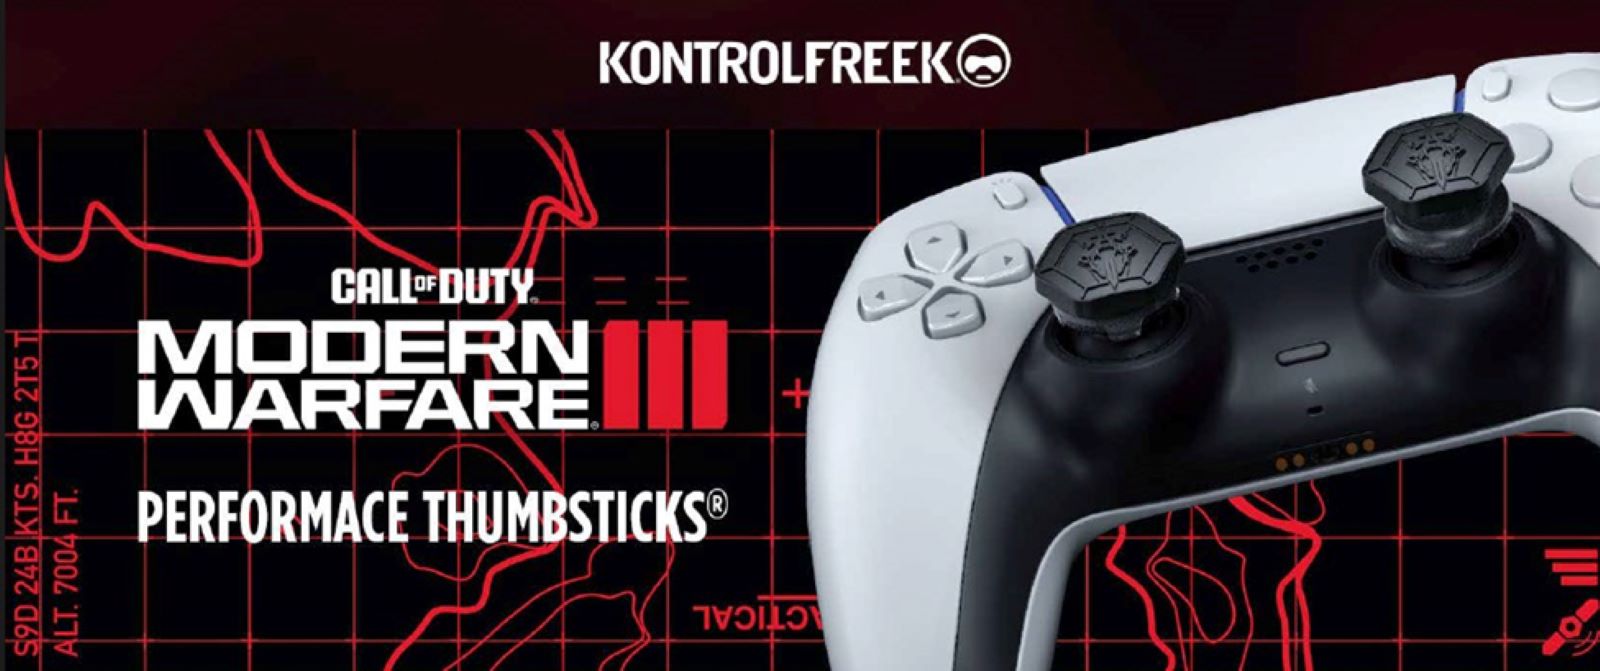 KontrolFreek unveil their new Call of Duty Vanguard Performance